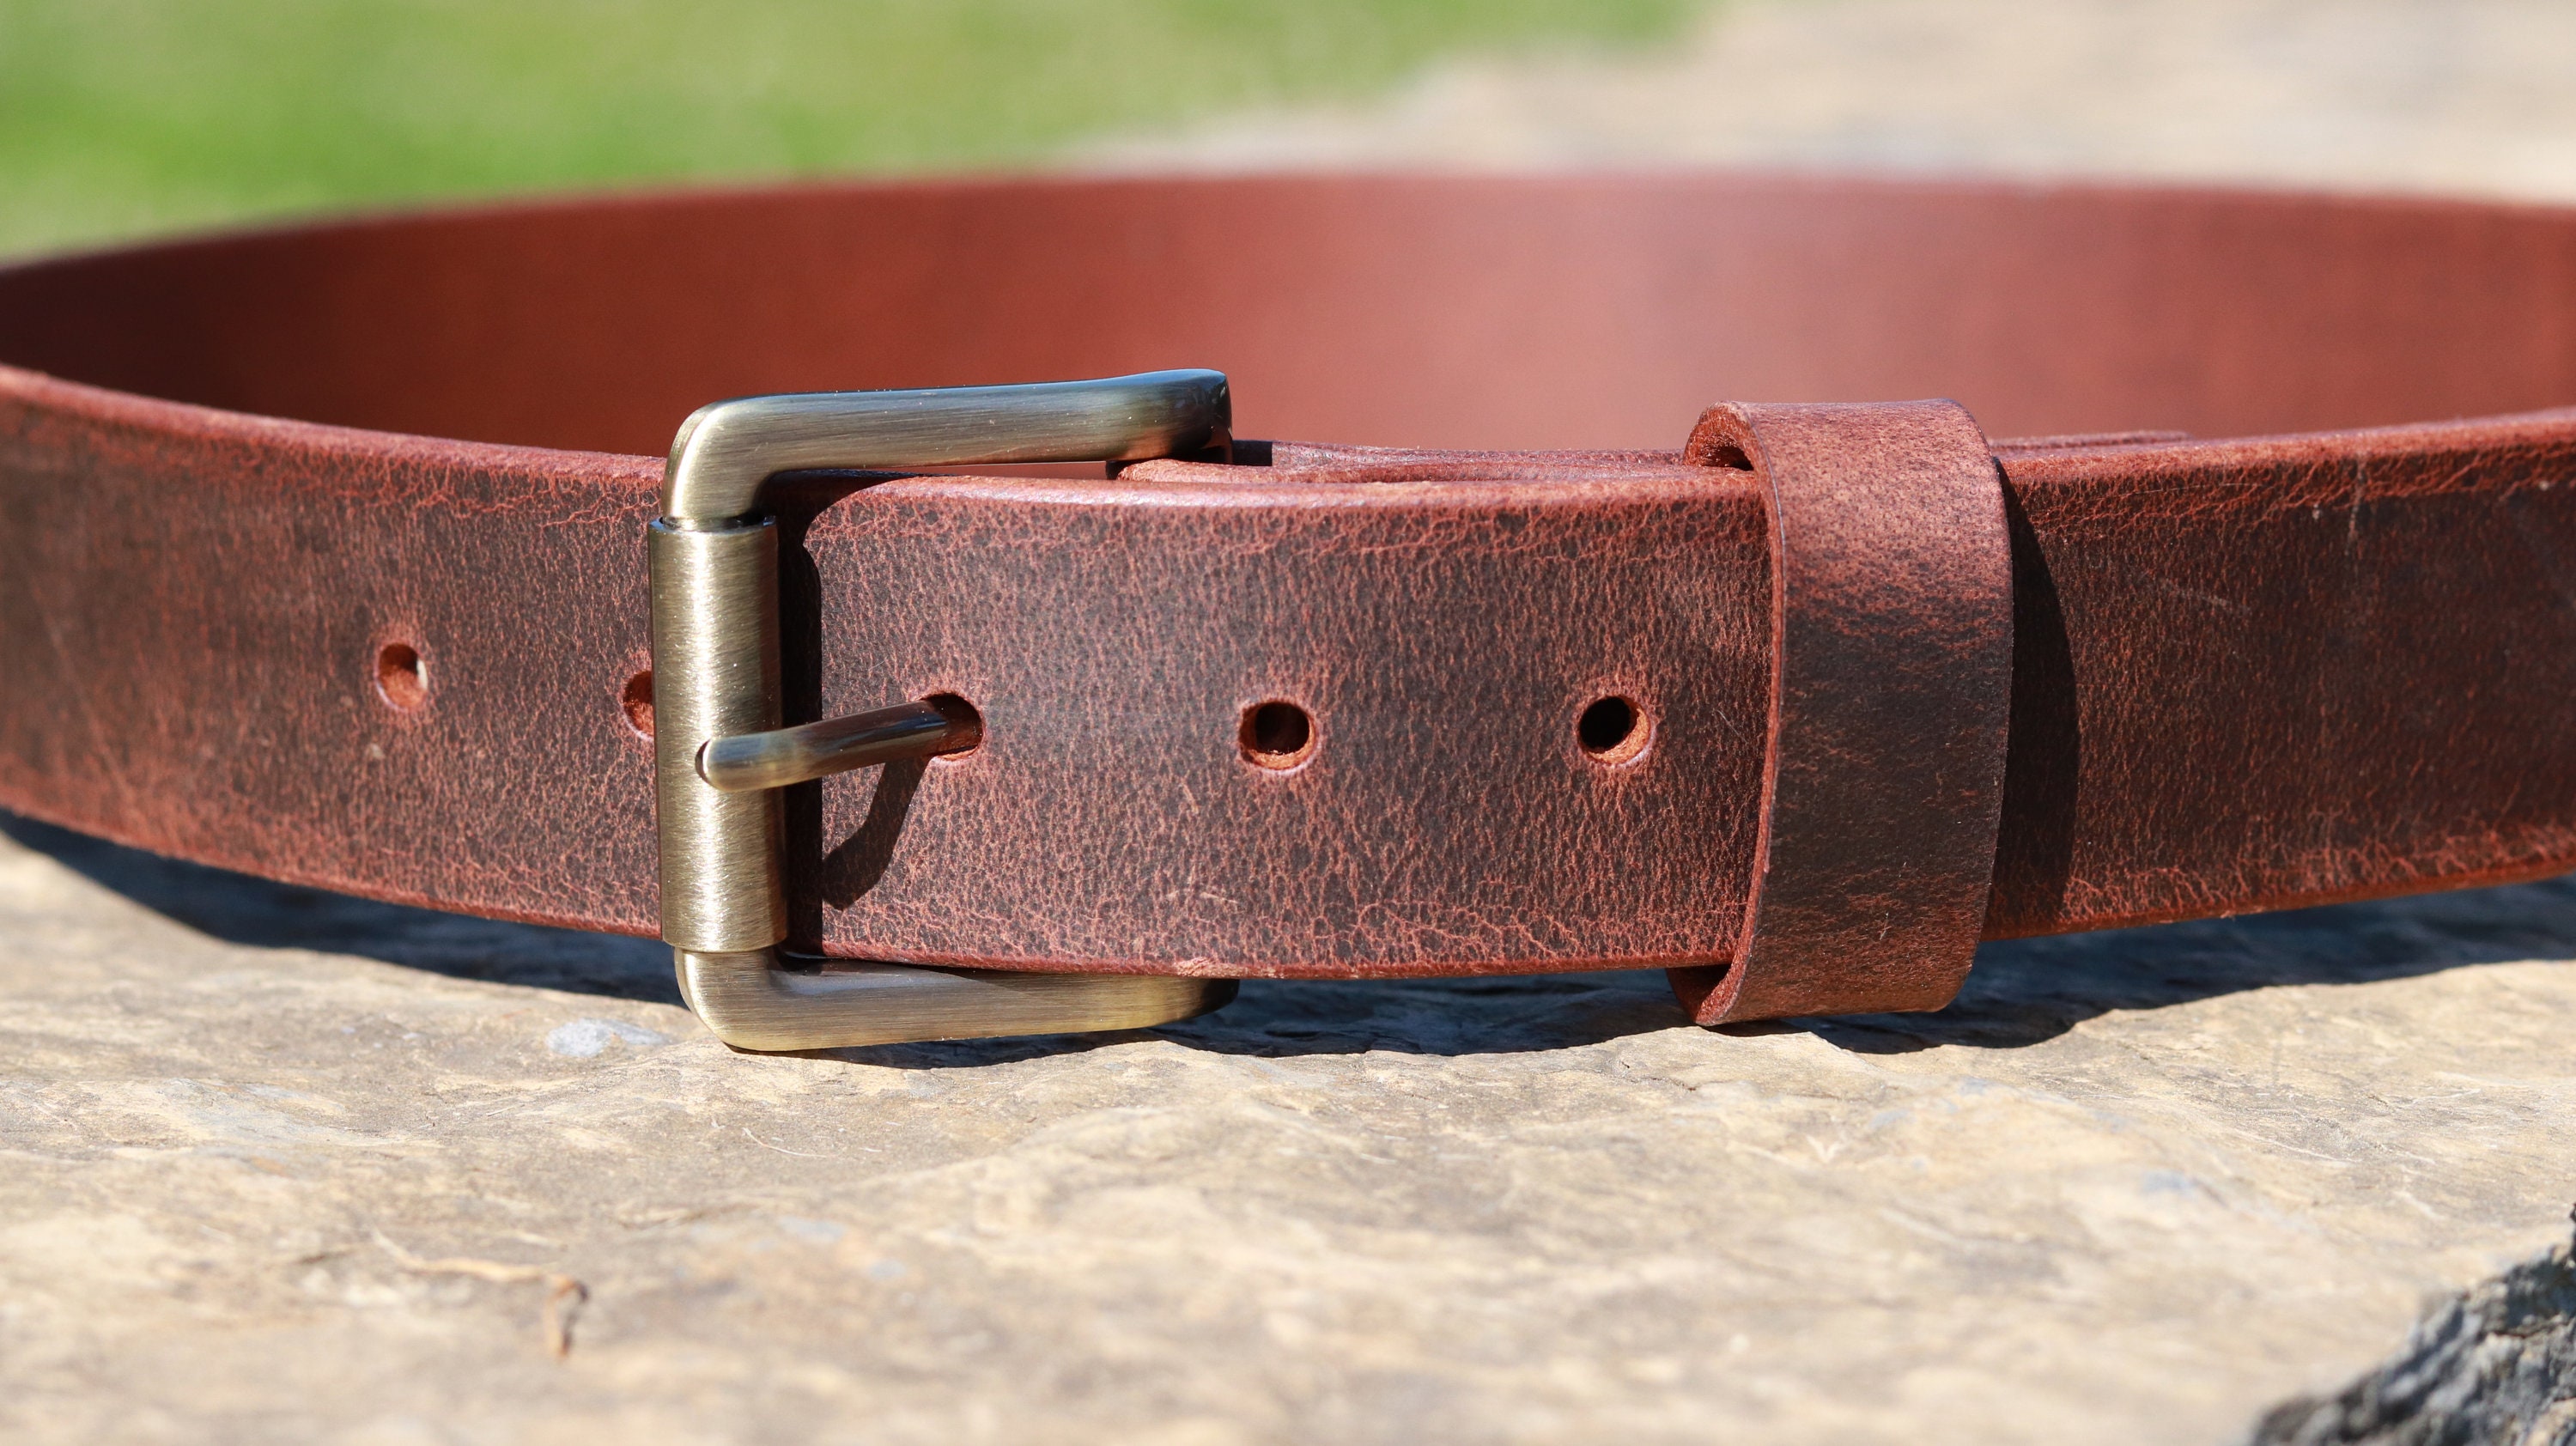 Buffalo Leather Belt - Made in USA - Handmade